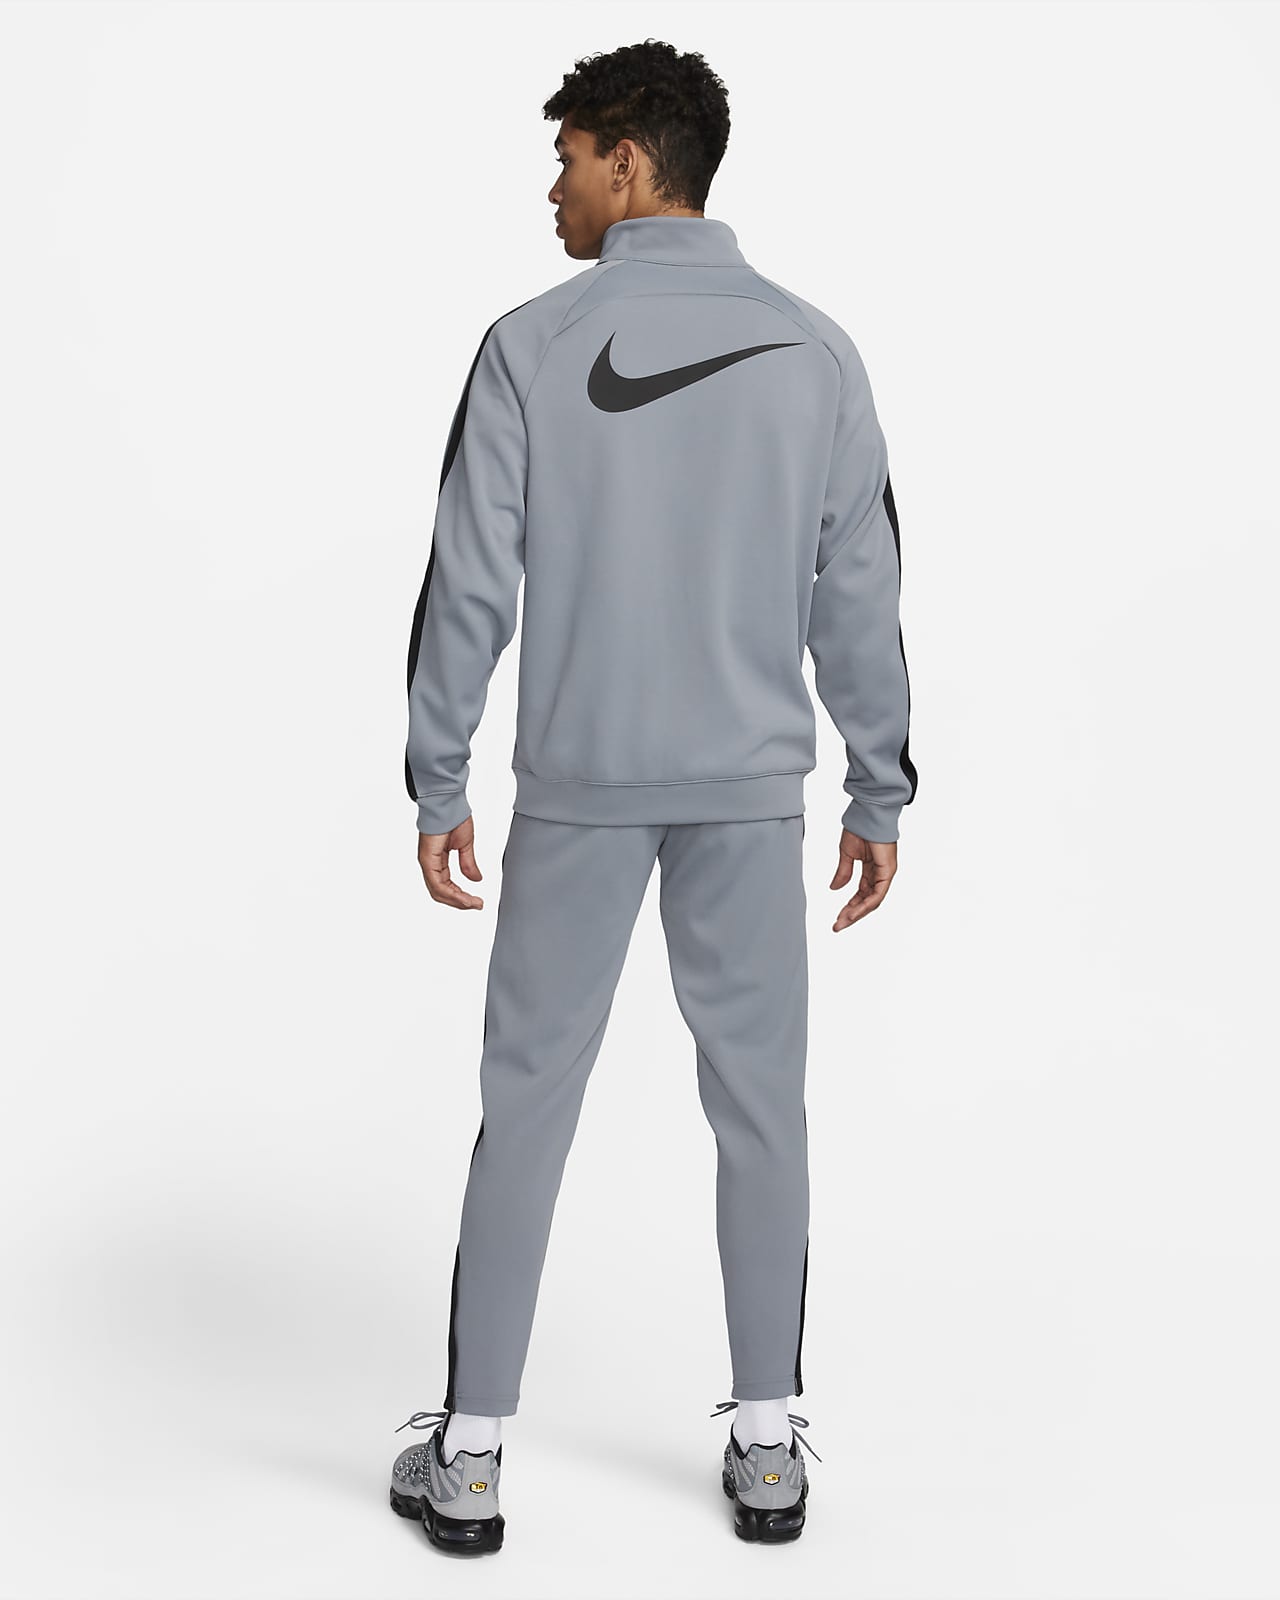 Nike Culture of Football Men's Dri-FIT Soccer Tracksuit.